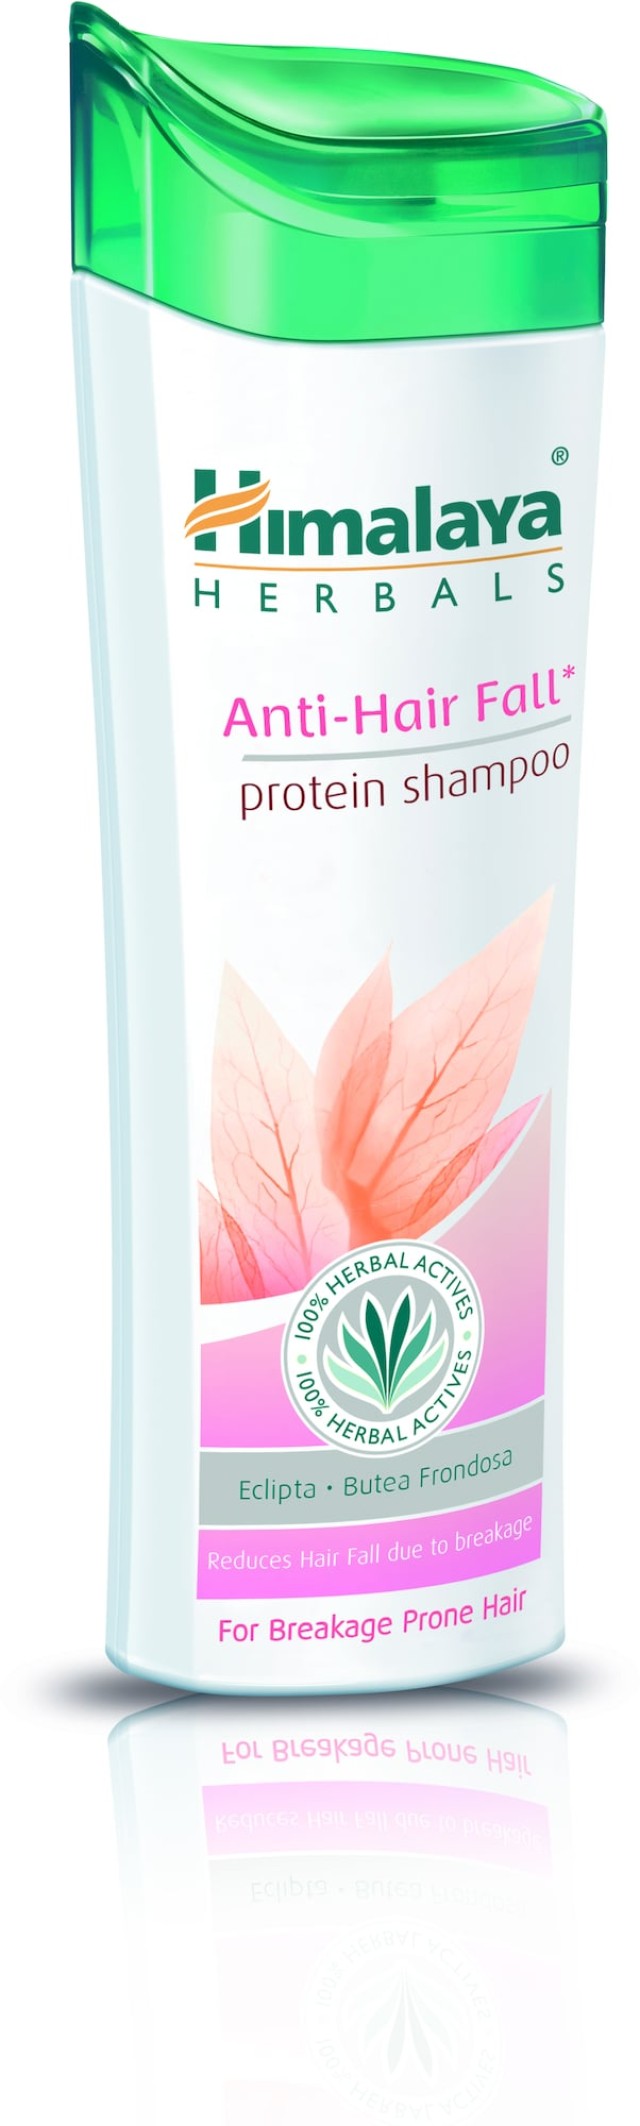 Himalaya Anti-Hair Fall Protein Shampoo 200ml